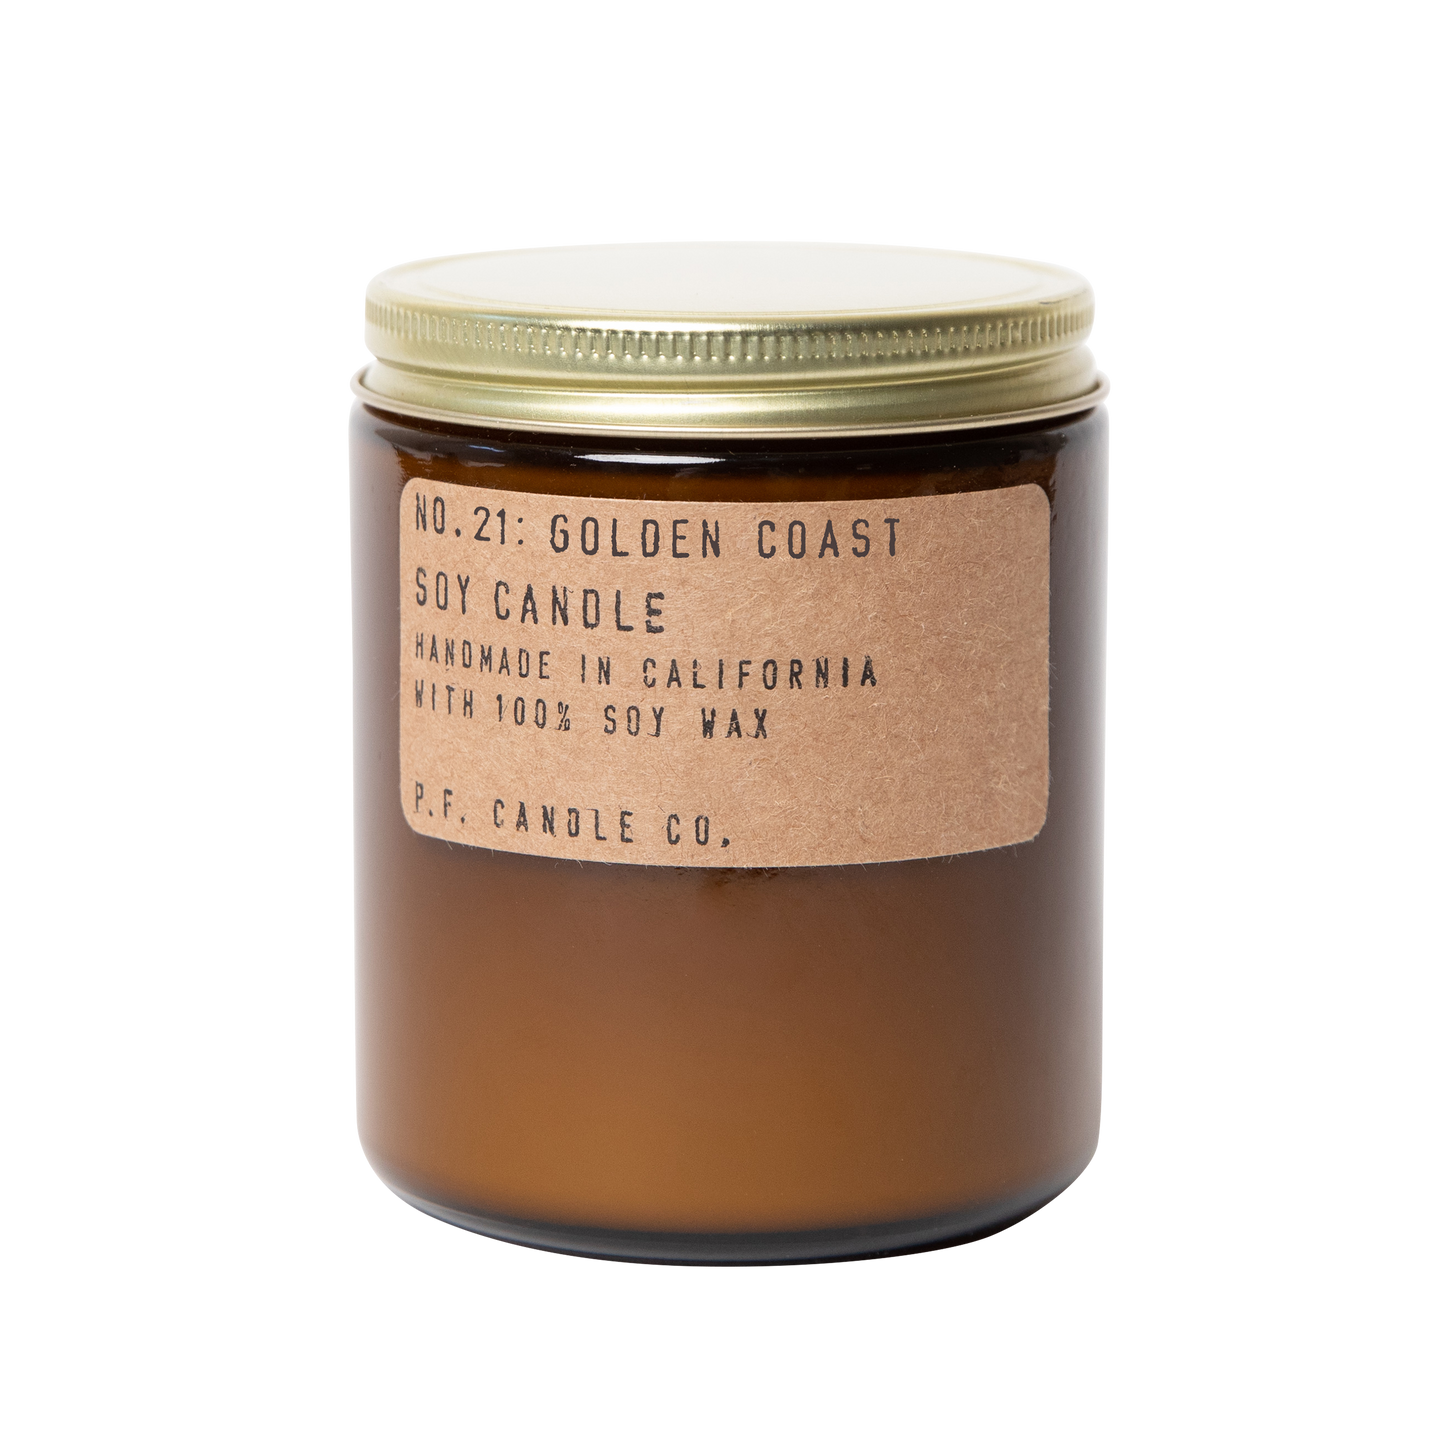 Golden Coast Amber Jar Soy Candle